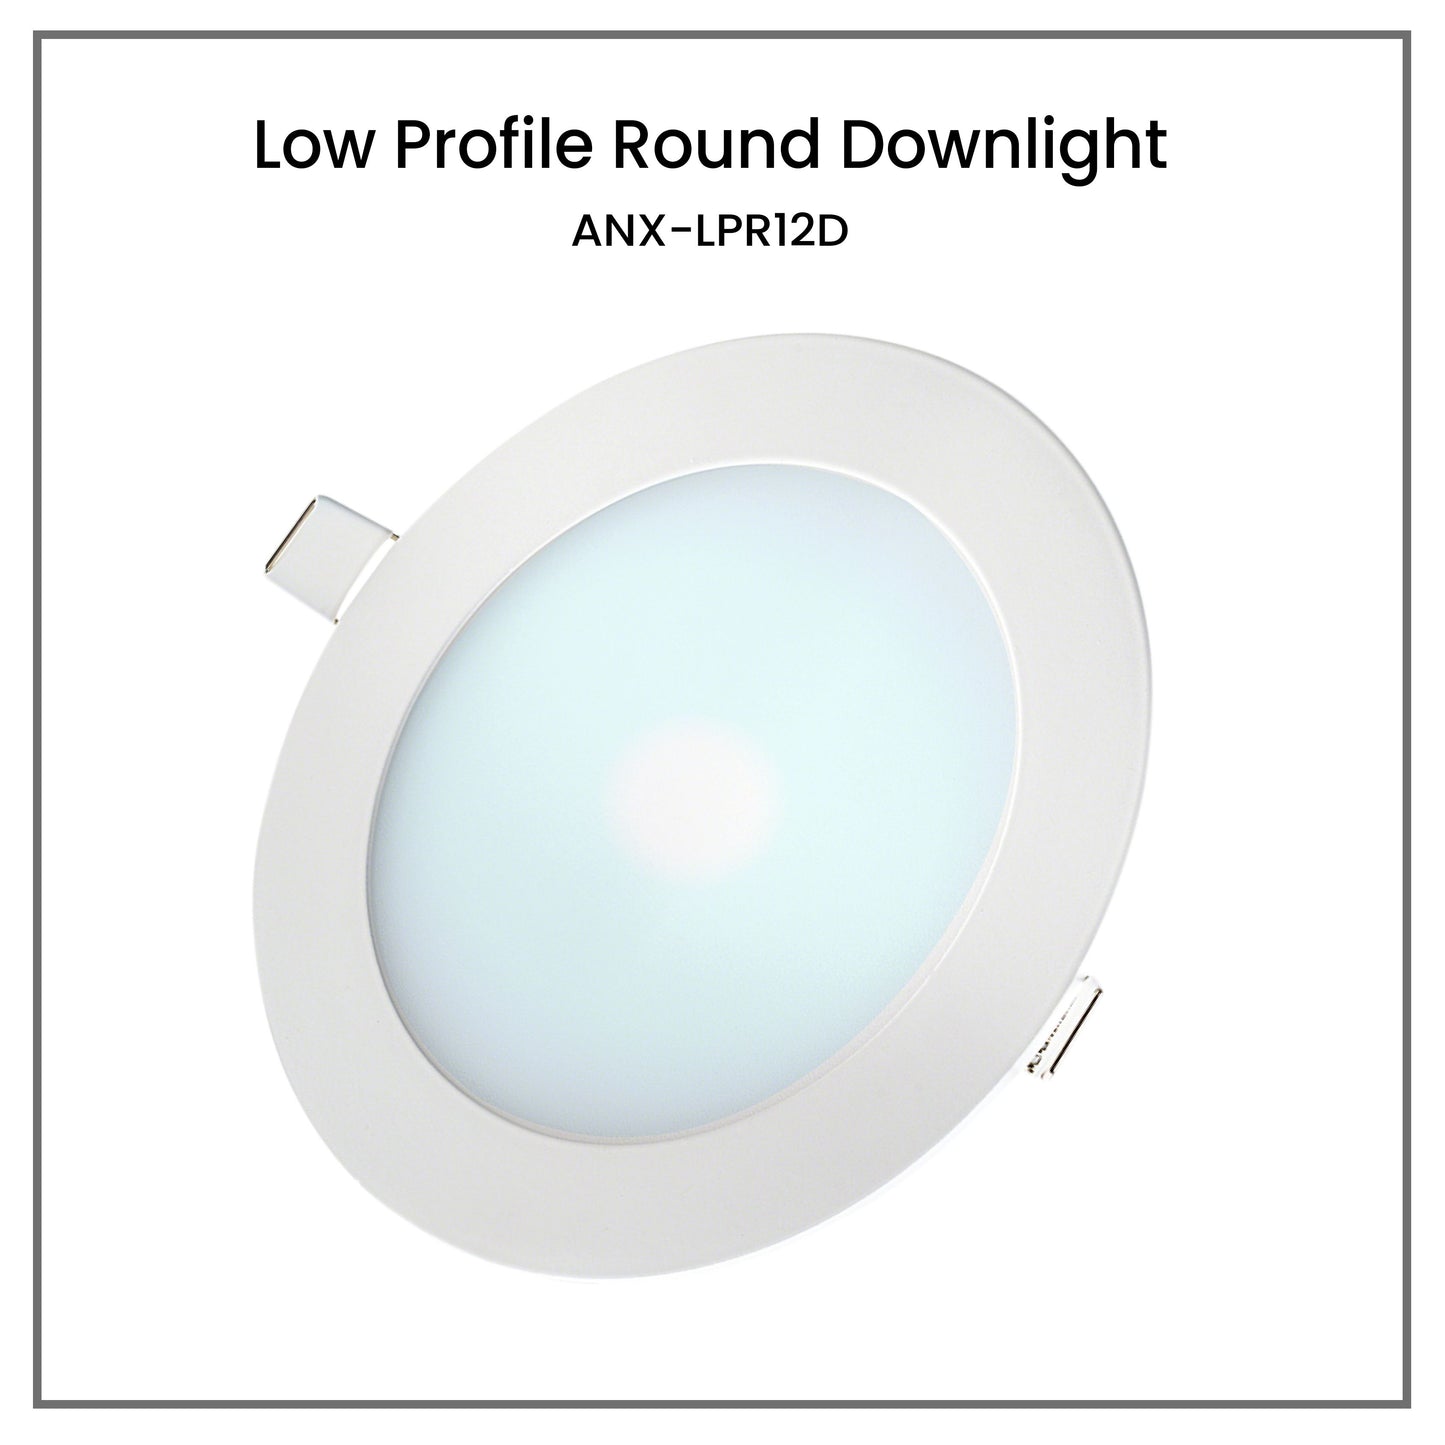 NxLedNxled 12W LED Low Profile Downlight (ANX-LPR12D)
Key Features:
Nxled 12W LED Low Profile Downlight (ANX-LPR12D)


12W, 6500K, Daylight,
Round
730 lumens
170x22mm, 30,000HRS
220-240VAC 50/60Hz
downlightsNXLED